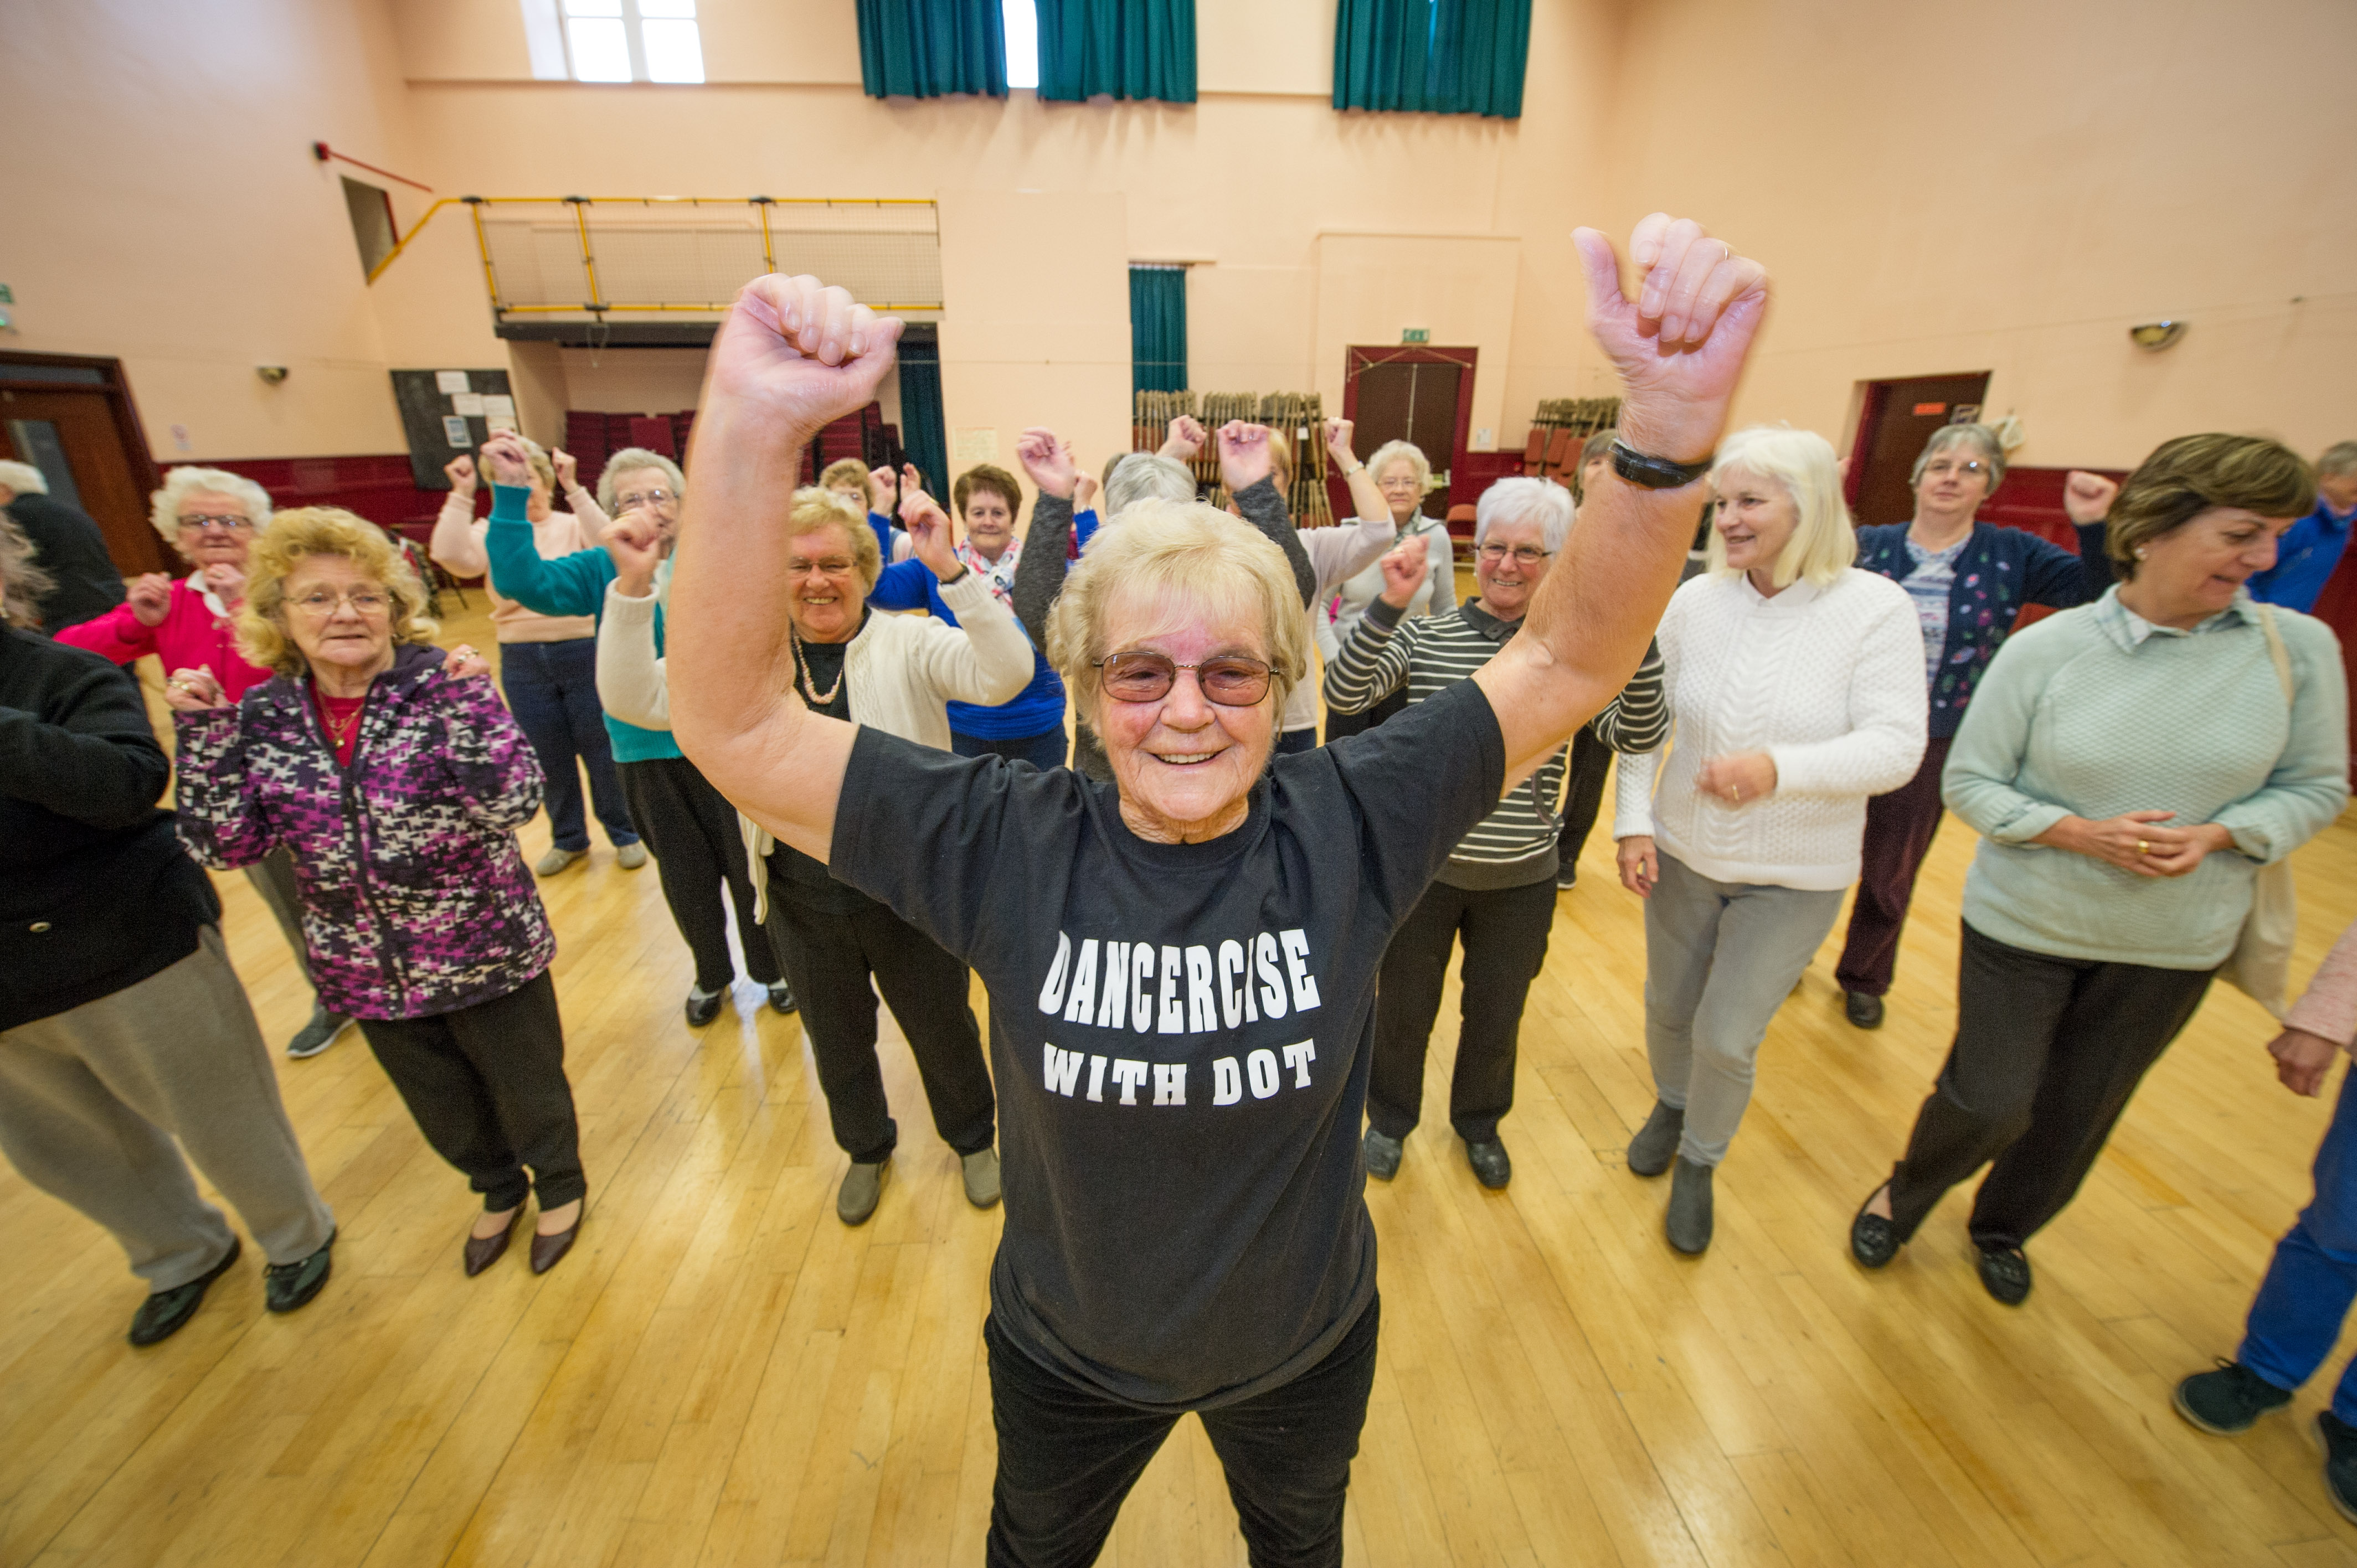 Dot Bremner runs dancing classes across Moray to raise money for charities.